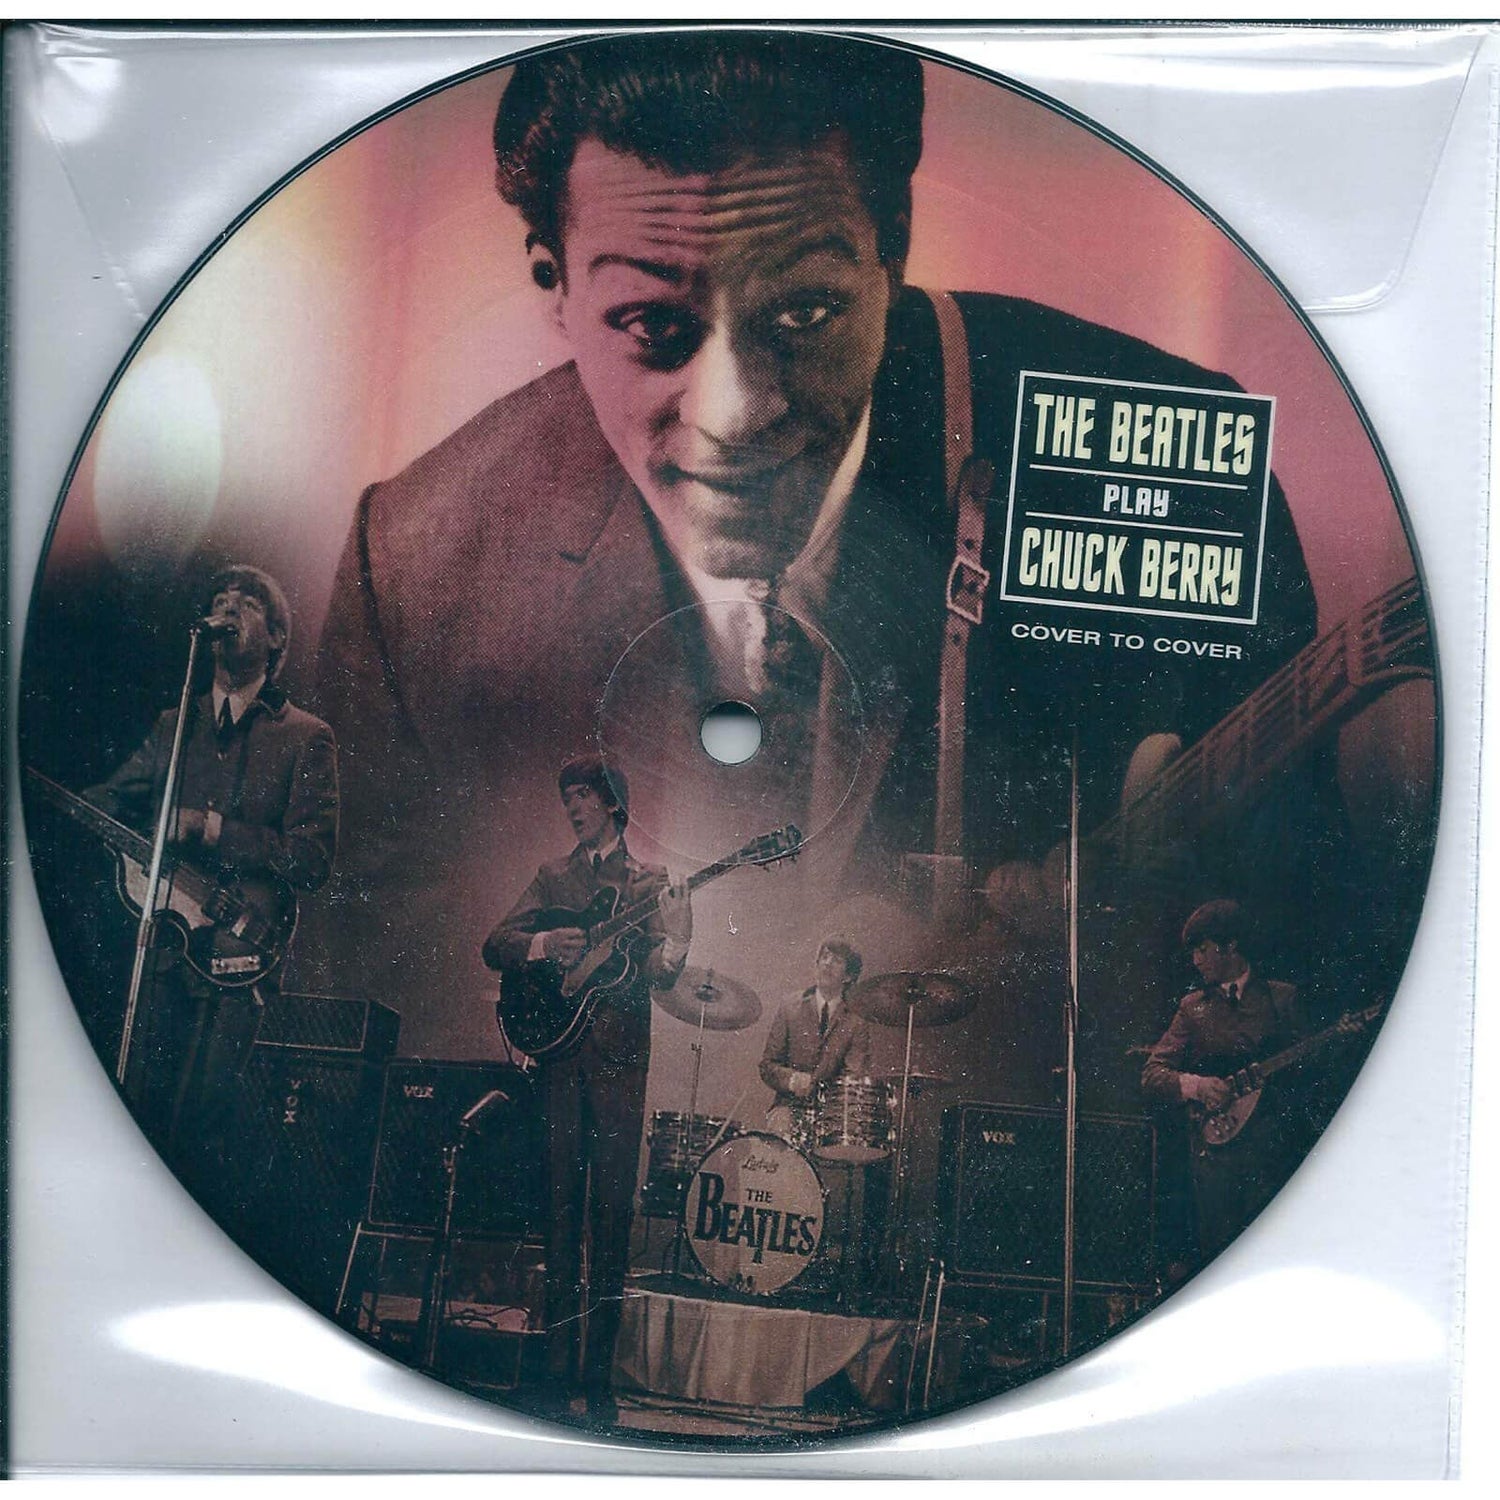 The Beatles - Beatles Spelen Chuck Berry (picture disc) 18 cm